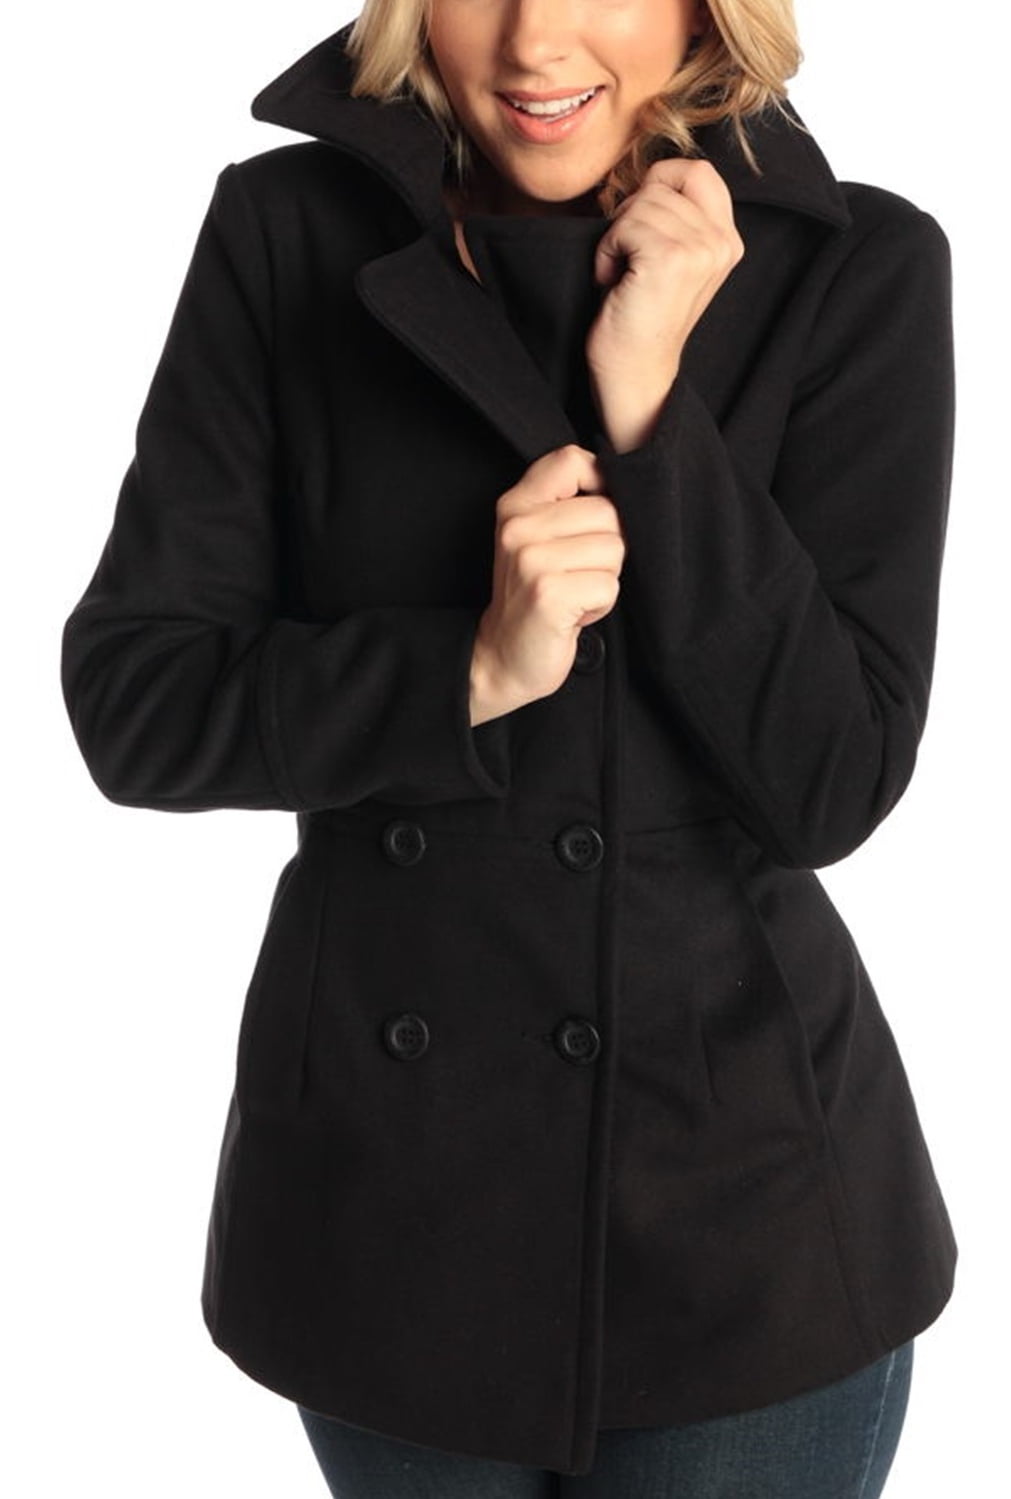 Alpine Swiss Emma Womens Peacoat Double Breasted Overcoat 3/4 Length Wool Blazer 